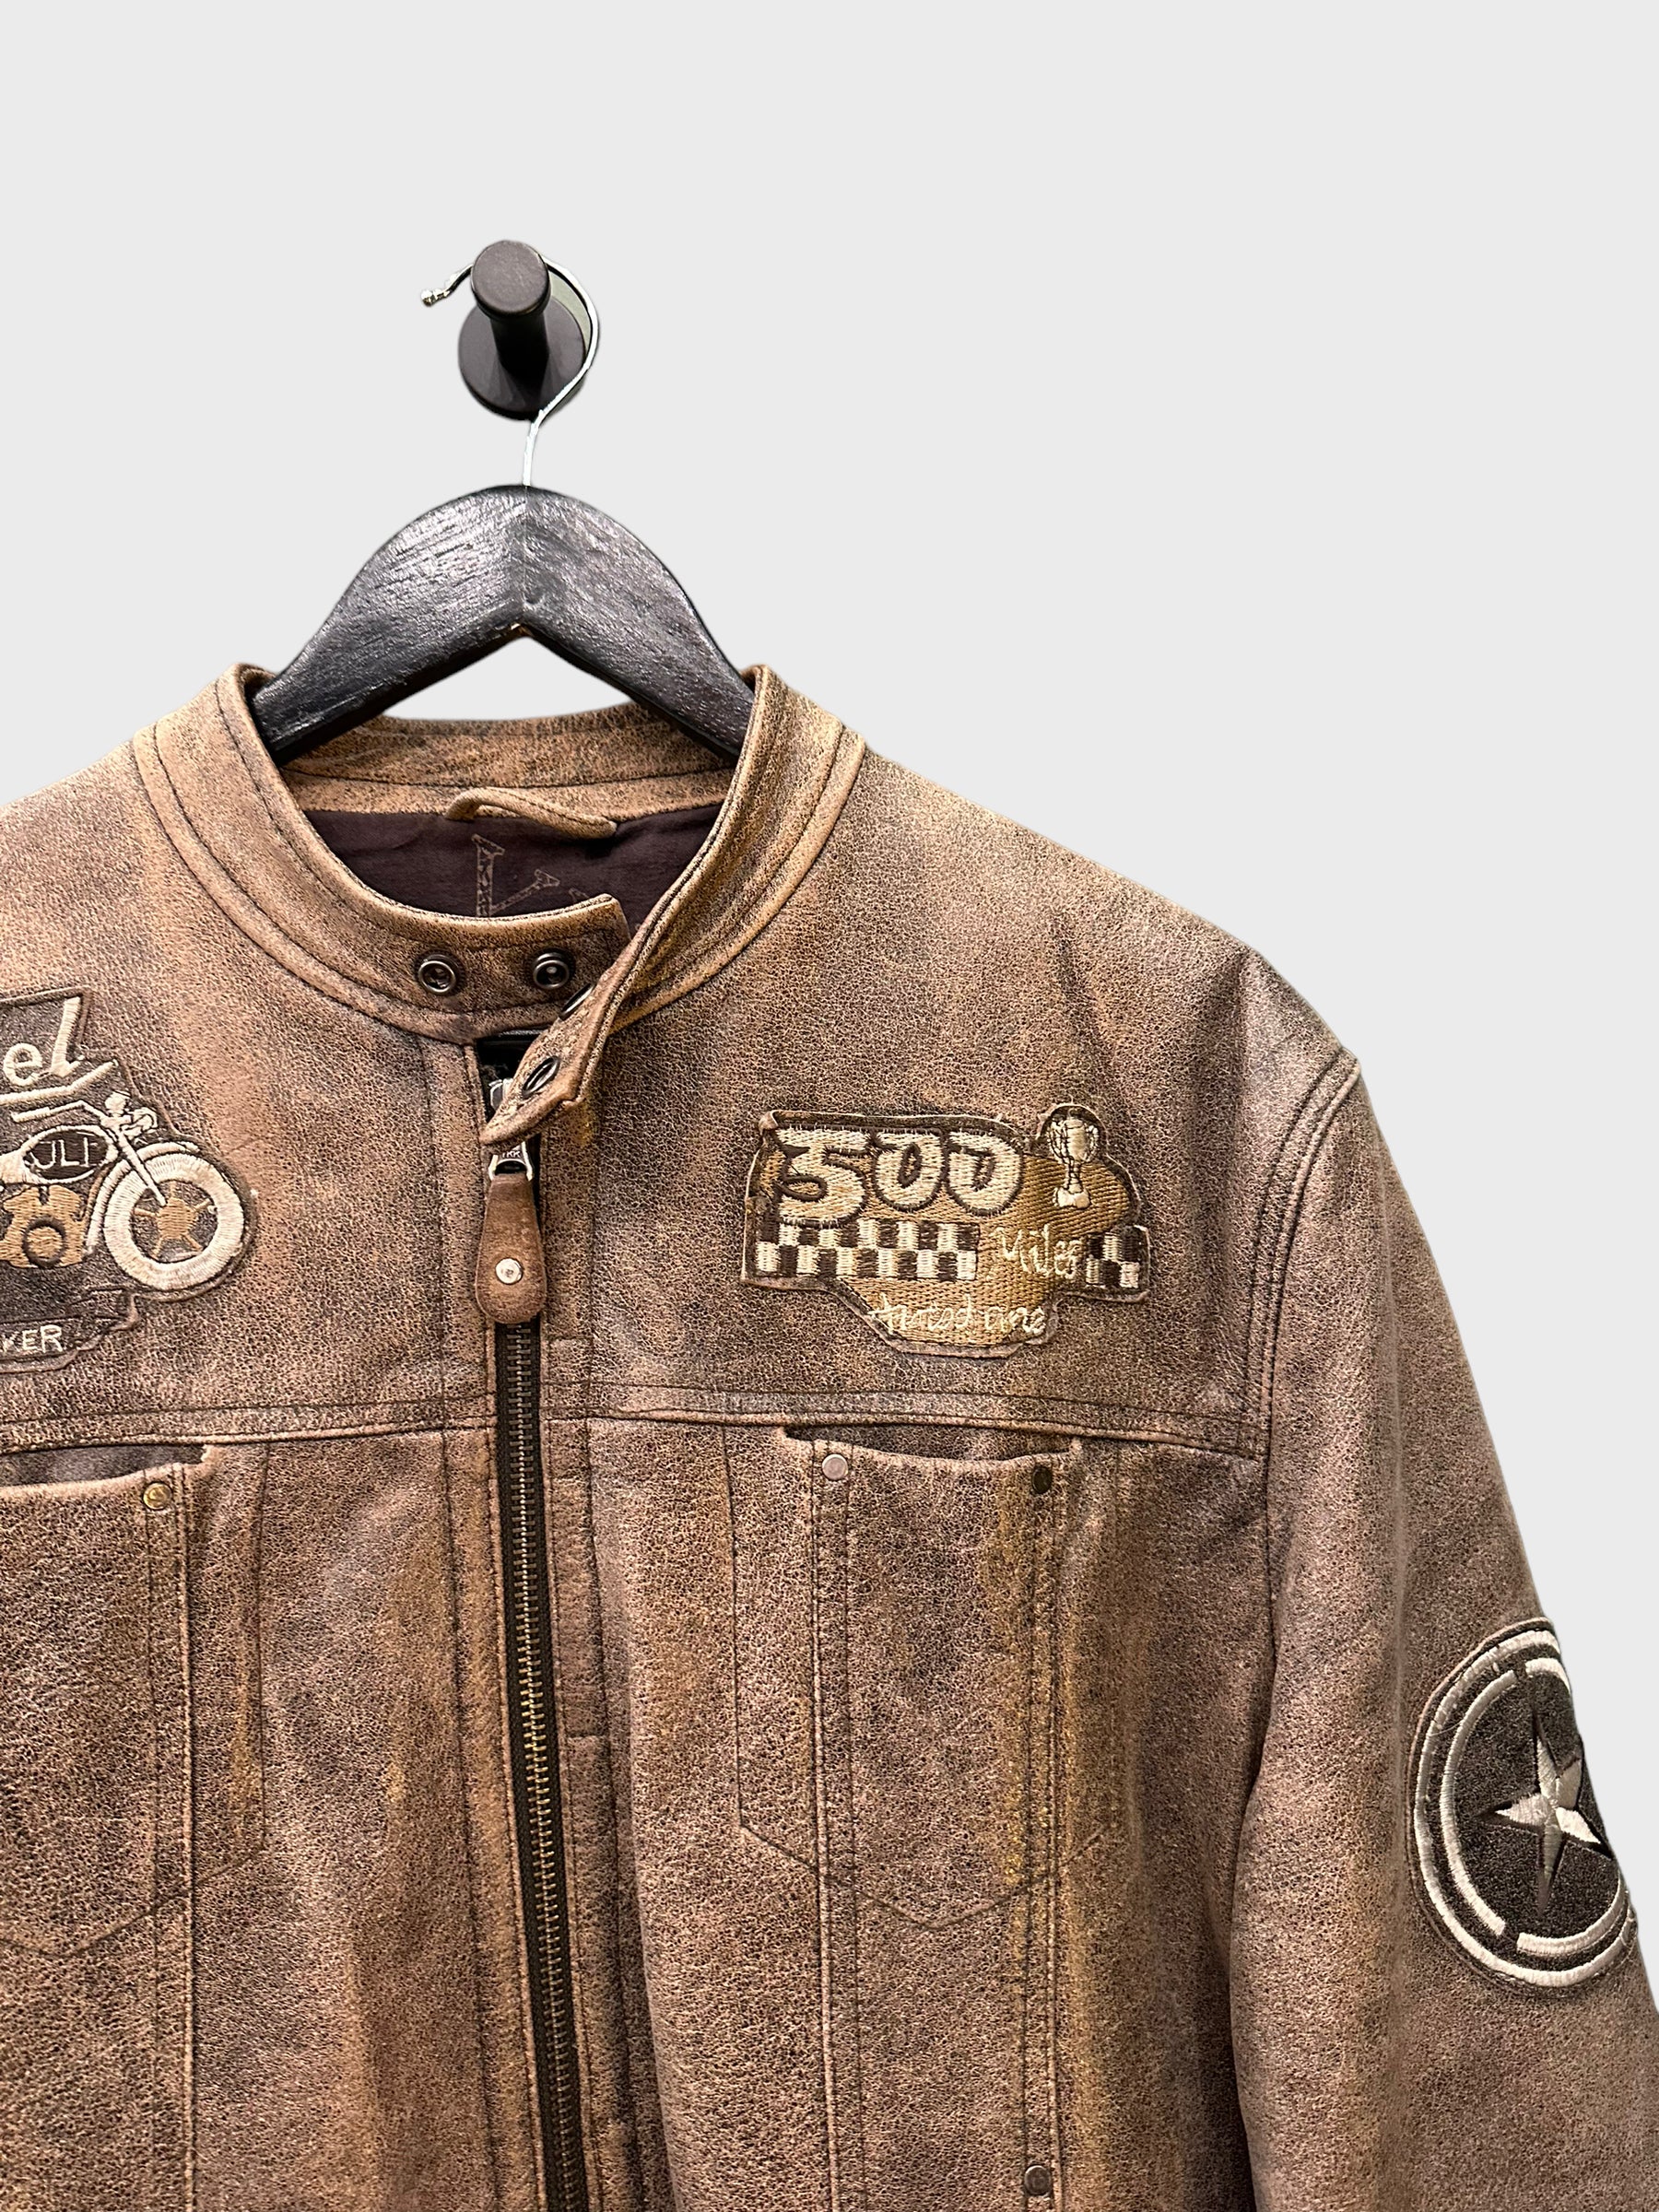 Leather Racer jacket